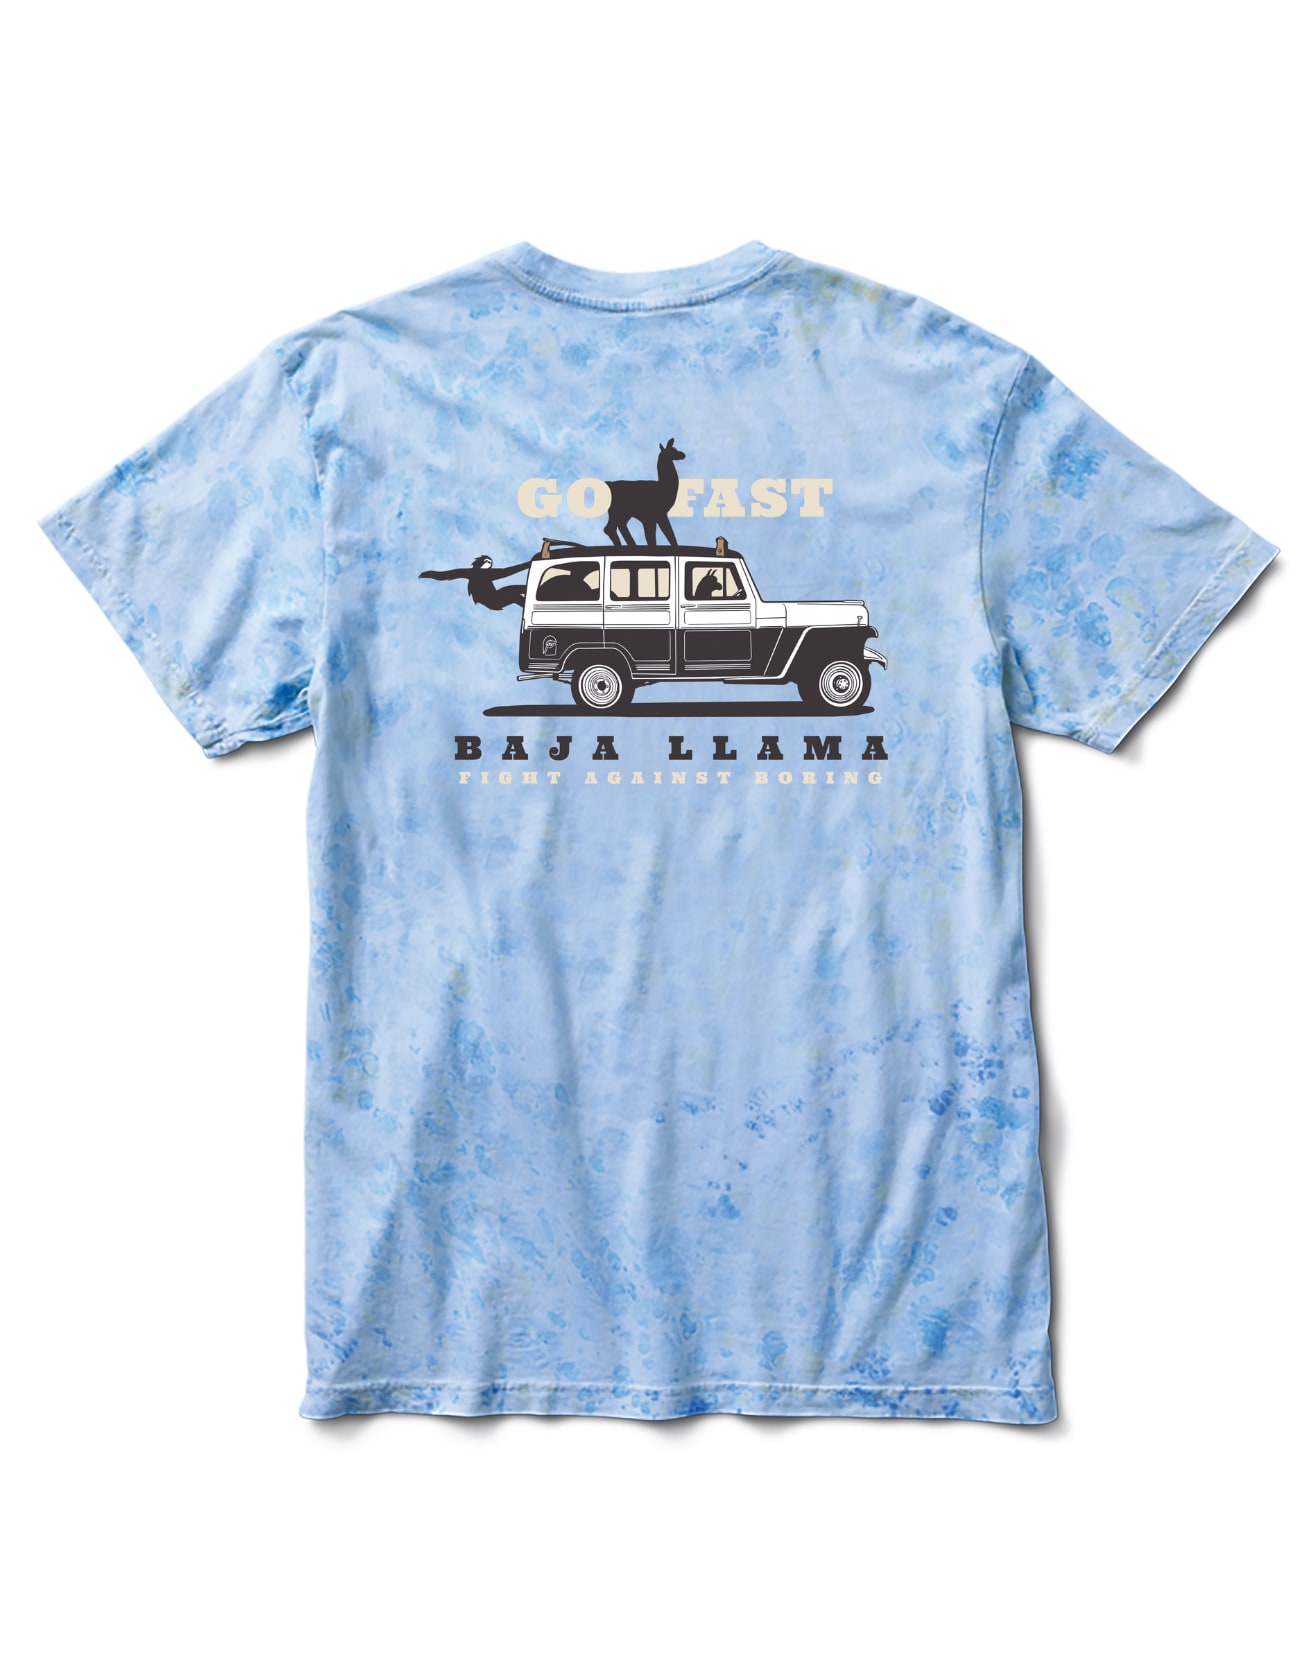 Men's Blue Go Fast Road Trip - Primo Graphic T-Shirt Small Baja Llama